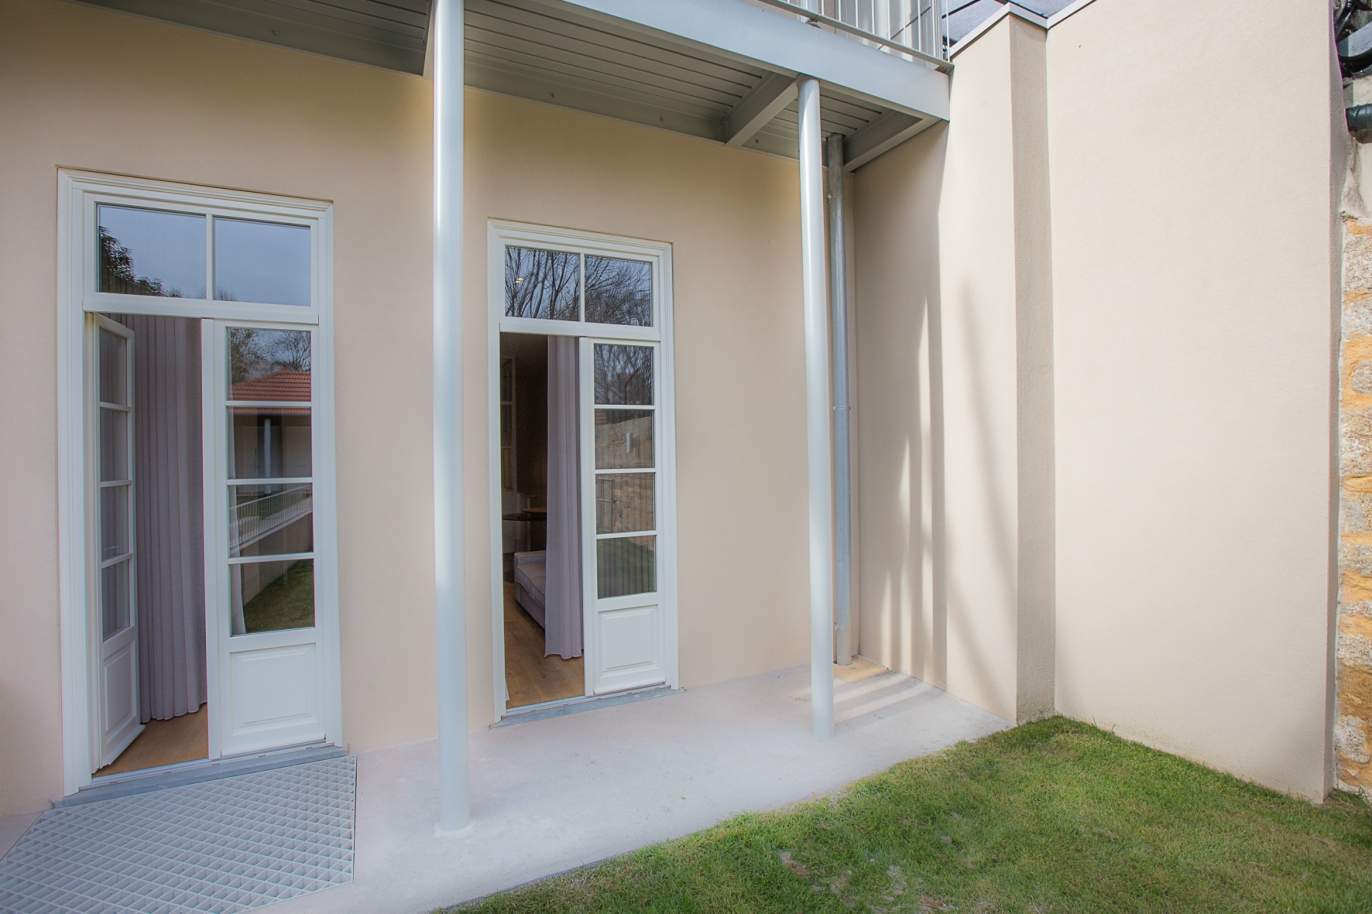 Venta de apartamento dúplex nuevo con patio, en Vila Nova de Gaia, Porto, Portugal_163479